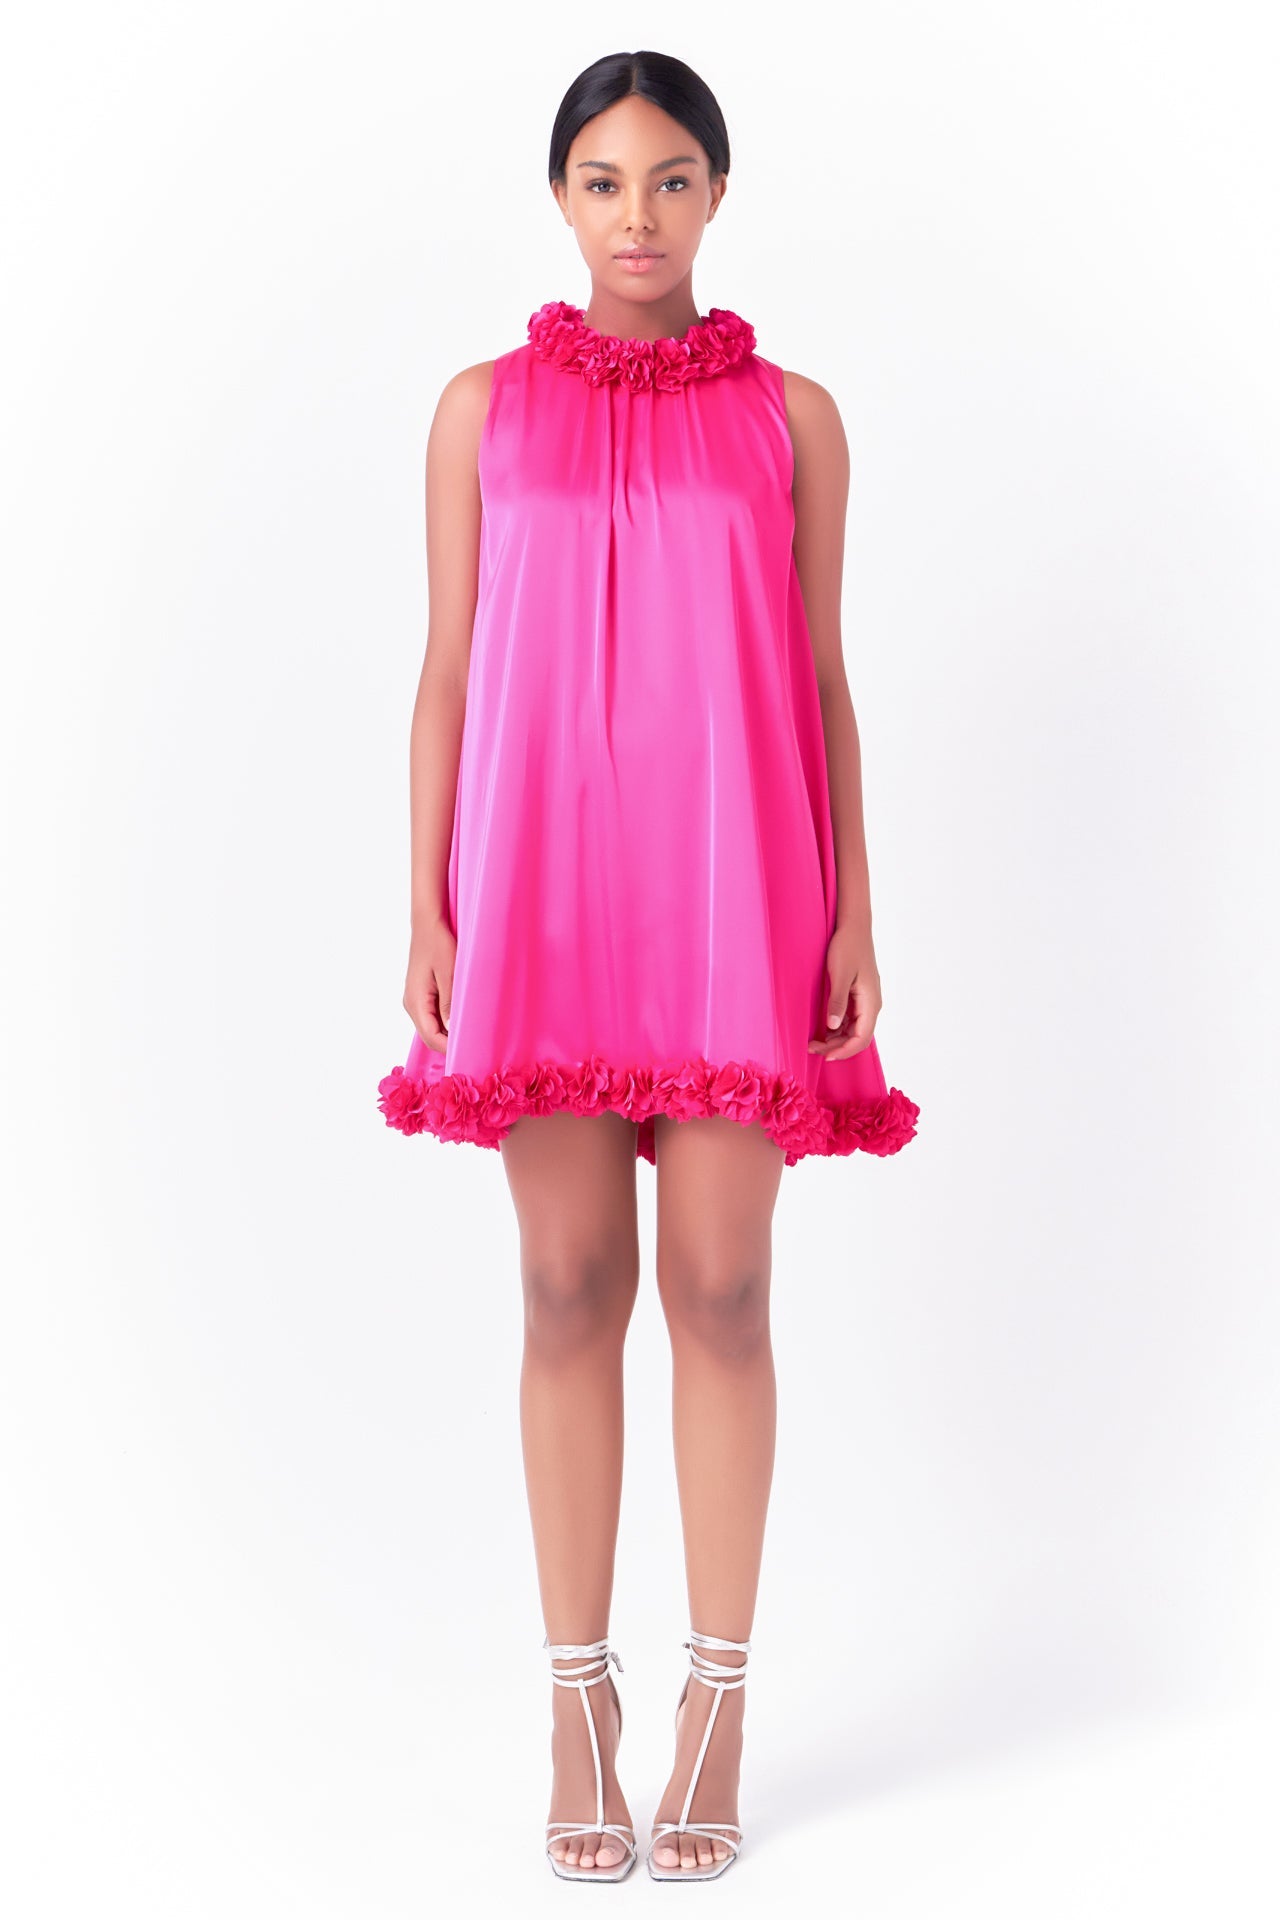 ENDLESS ROSE - Rosette Mini Dress - DRESSES available at Objectrare